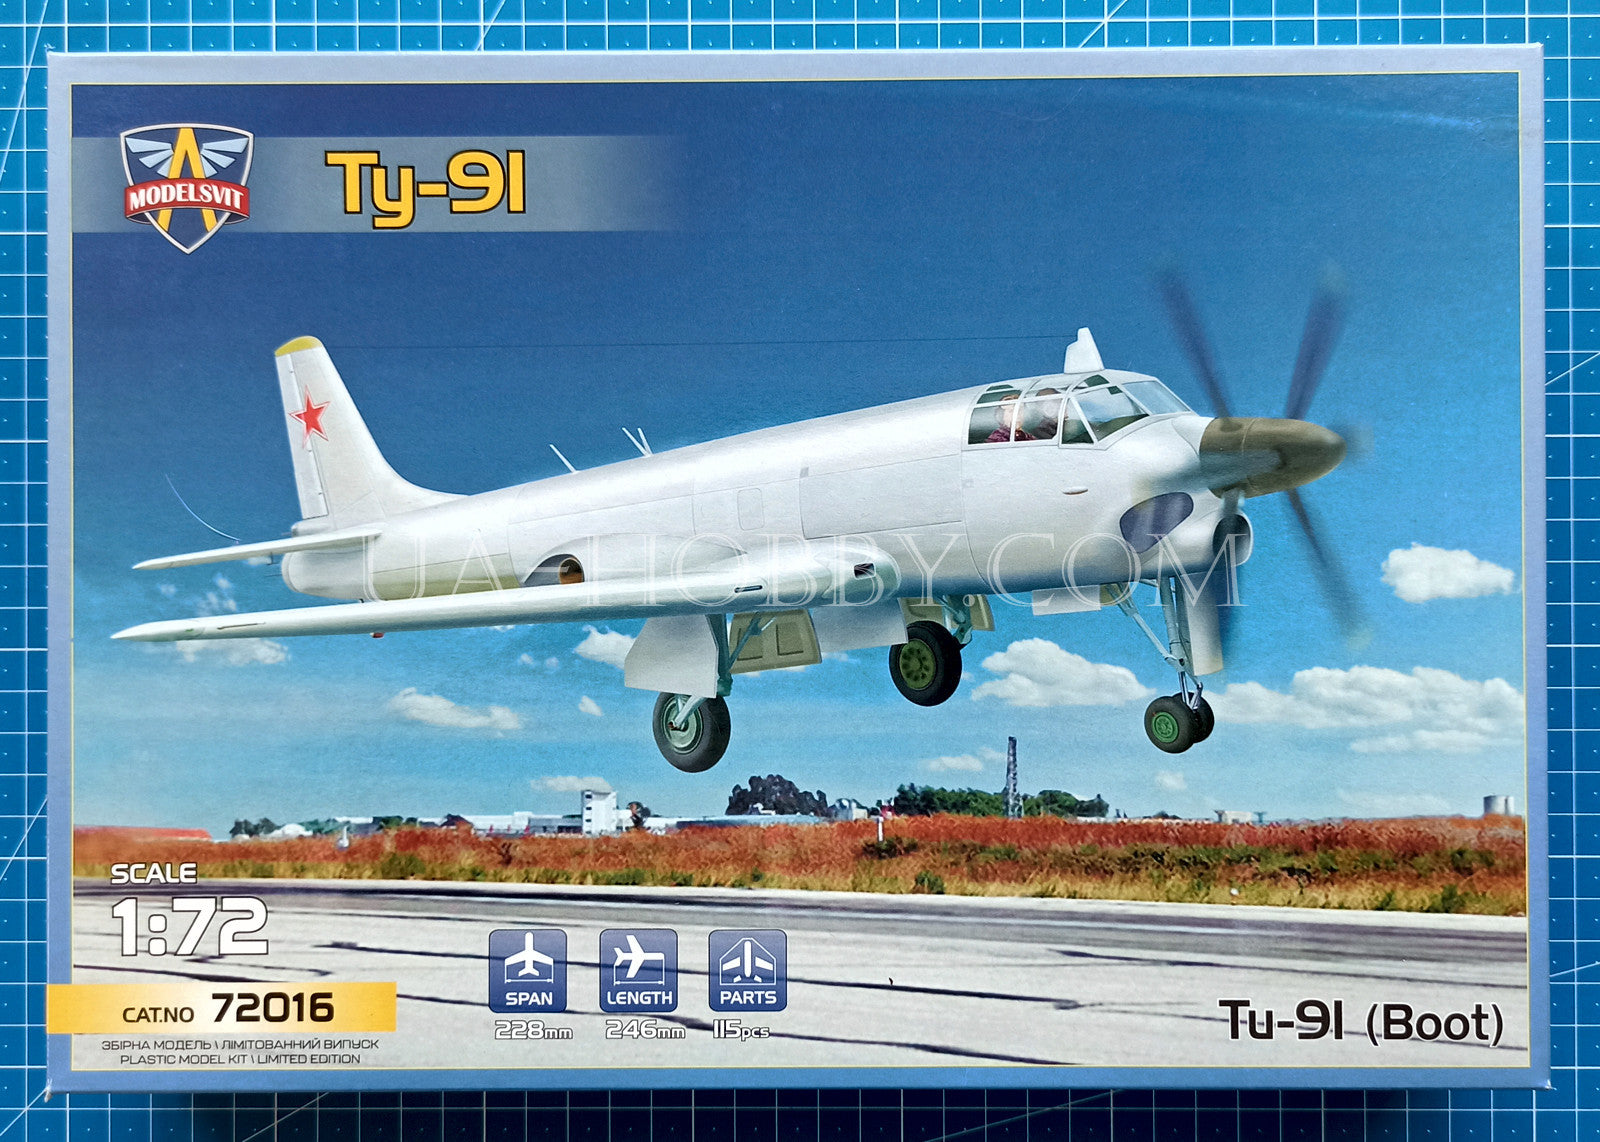 1/72 Tu-91 (Boot). ModelSvit 72016